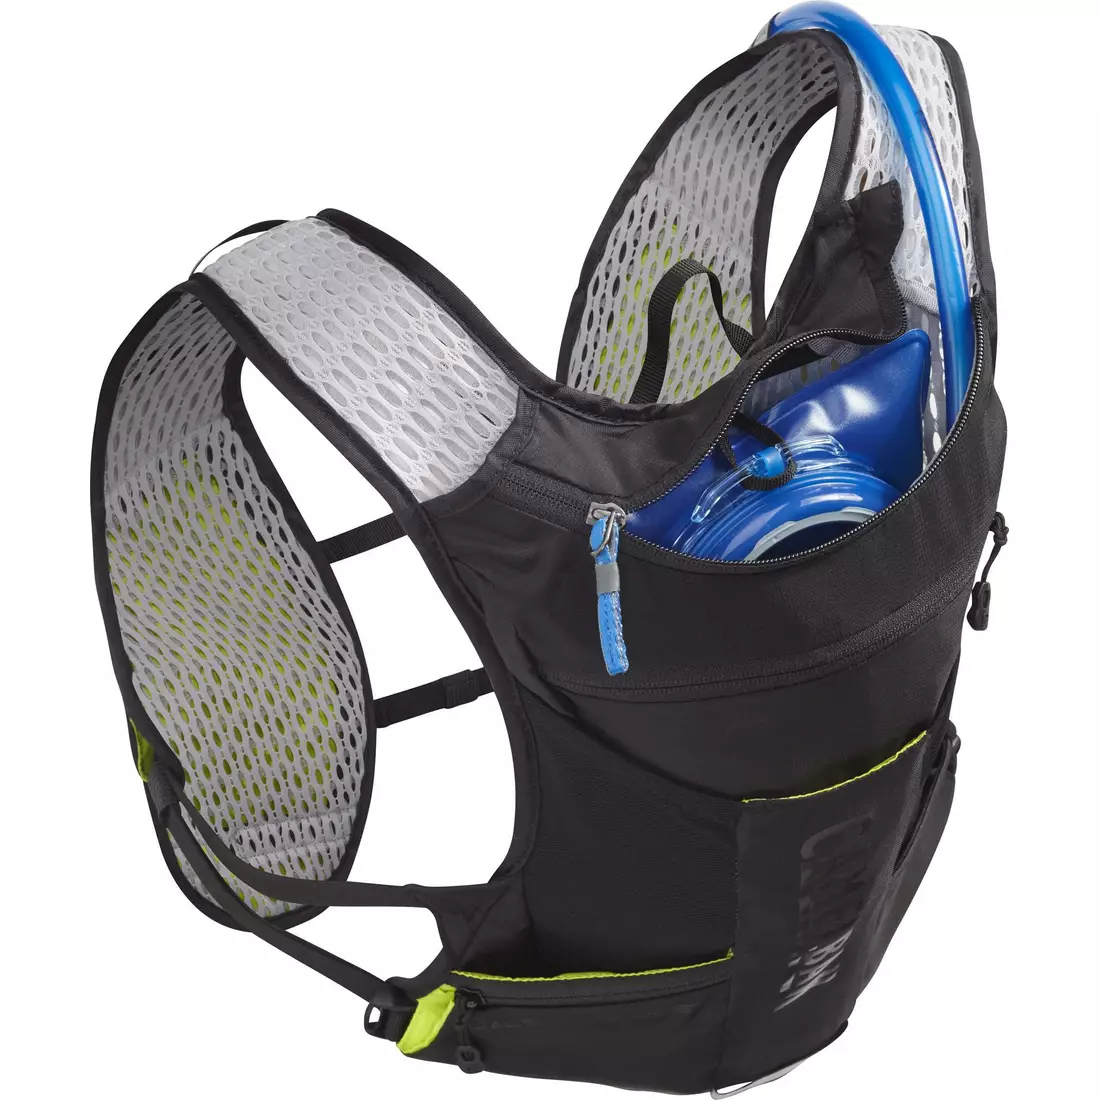 CAMELBAK Chase Bike Vest backpack/running vest with water bladder 1.5L black